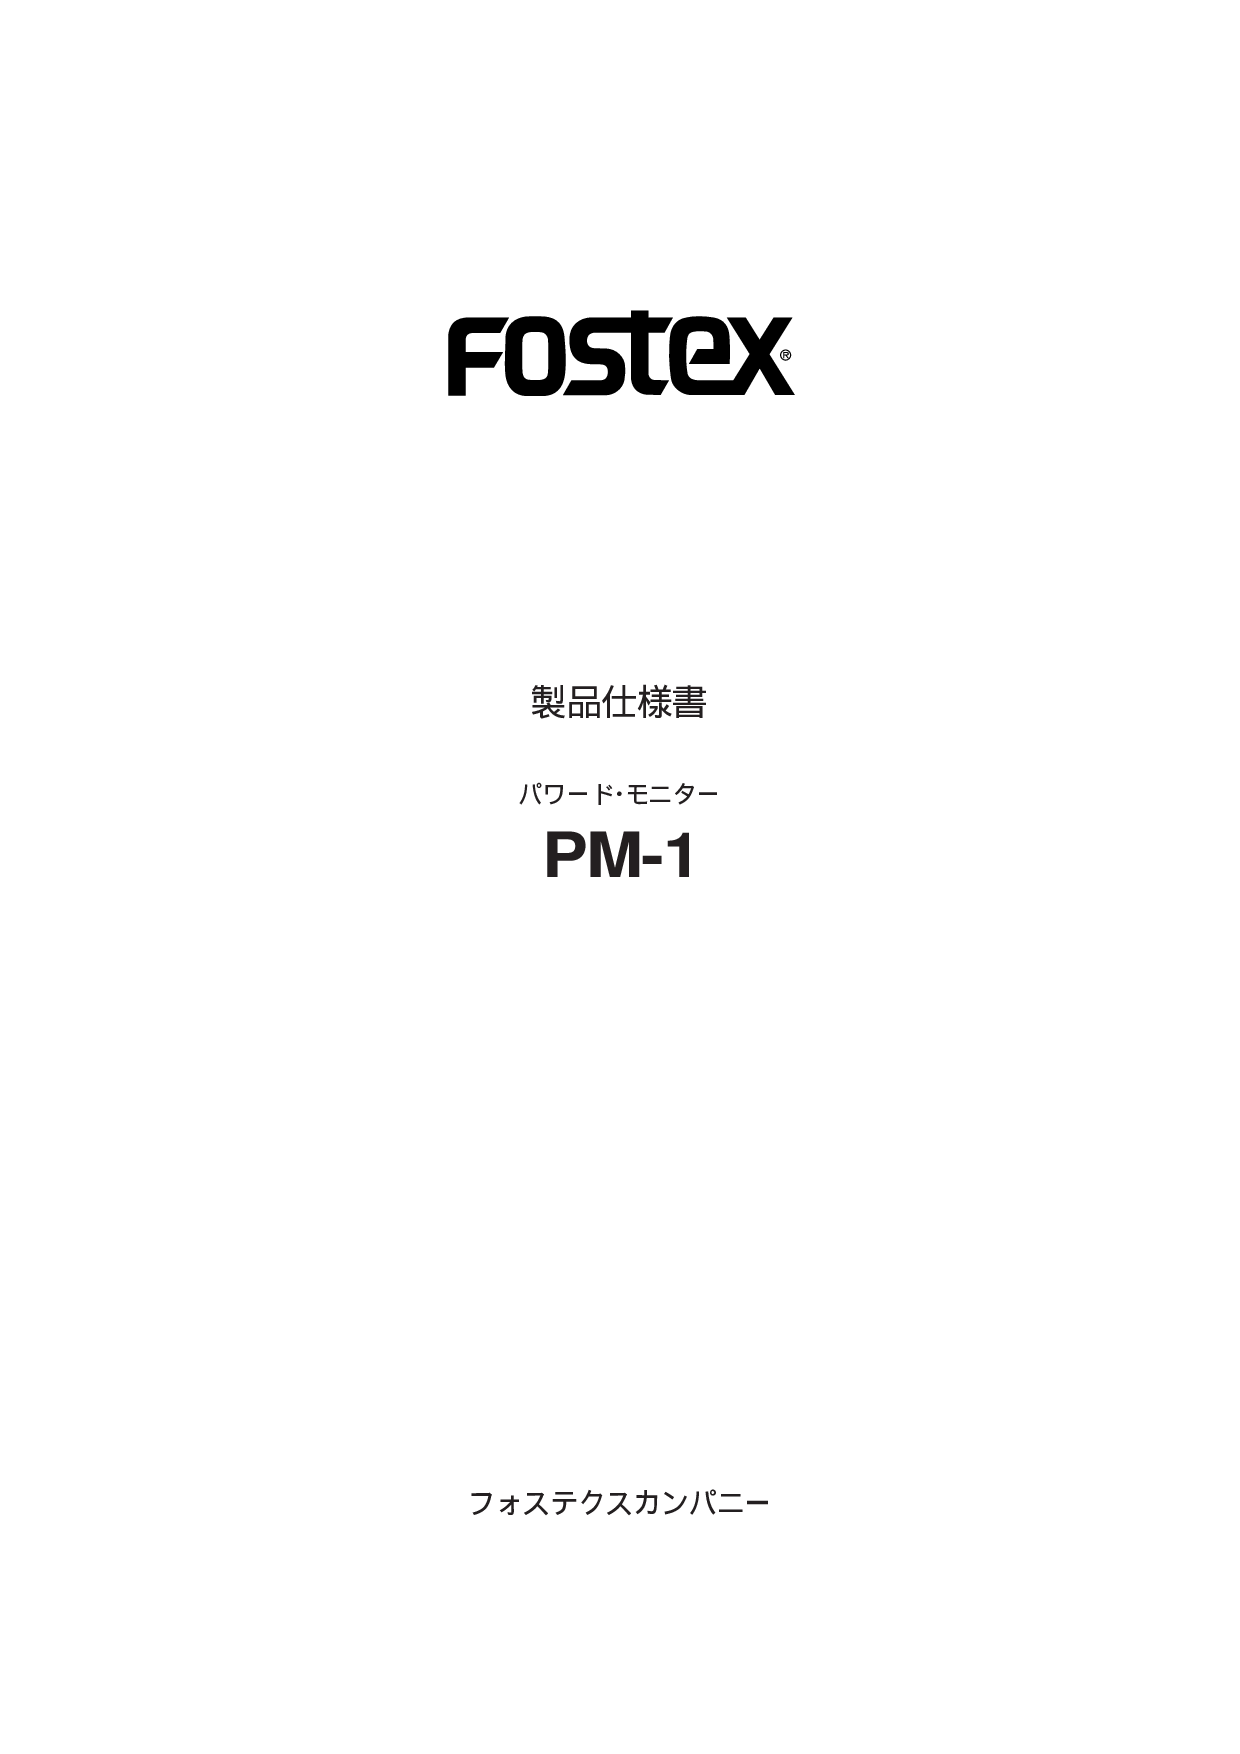 Fostex PM-1 User Manual